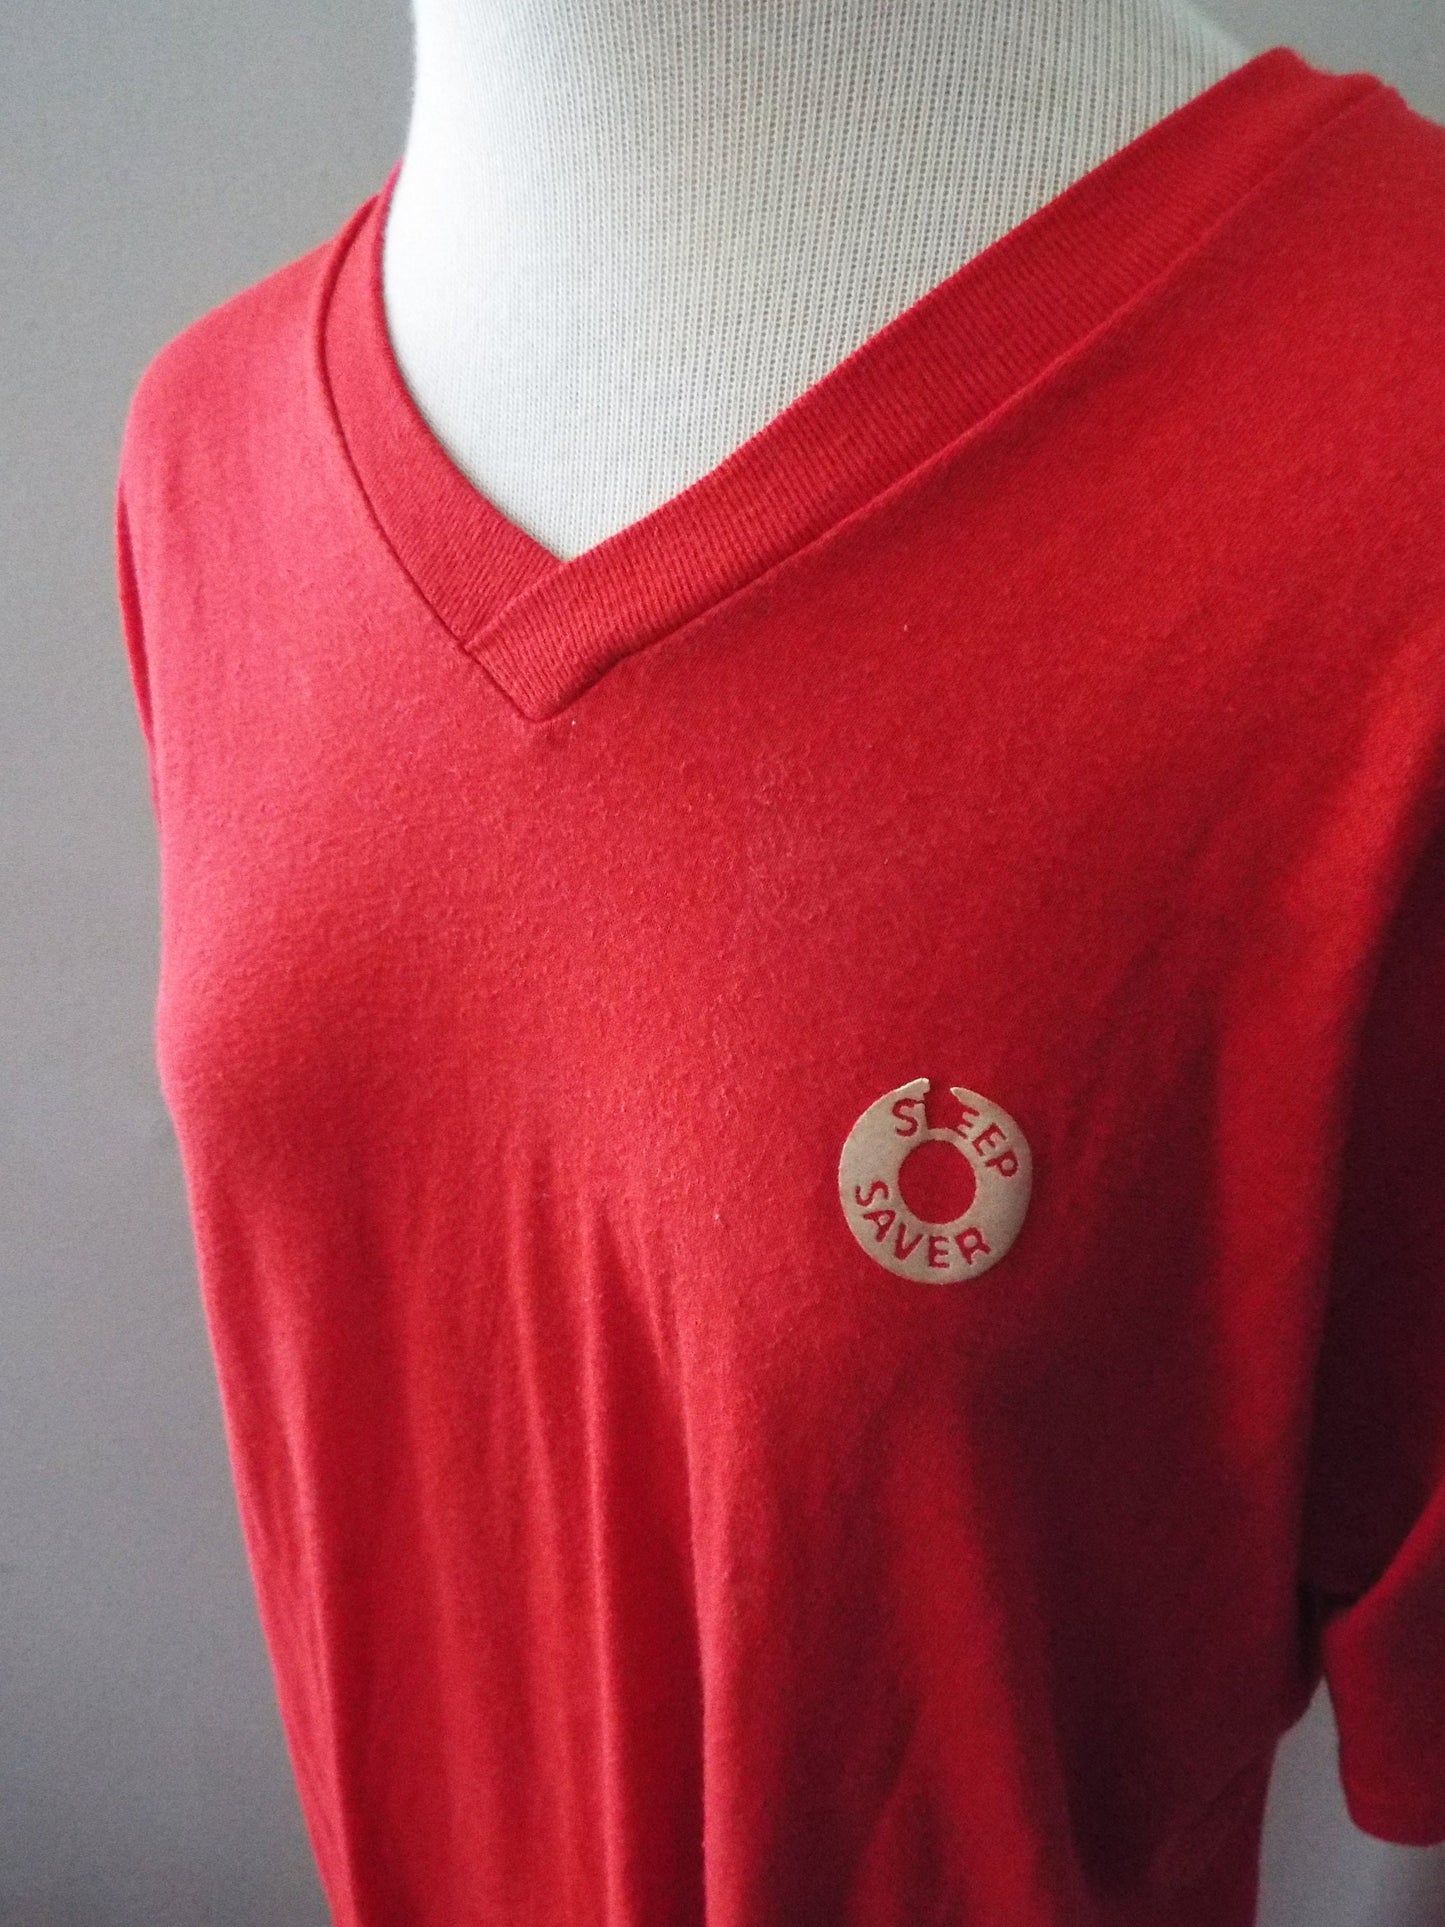 Vintage Sleep Saver Night Shirt by Diplomat